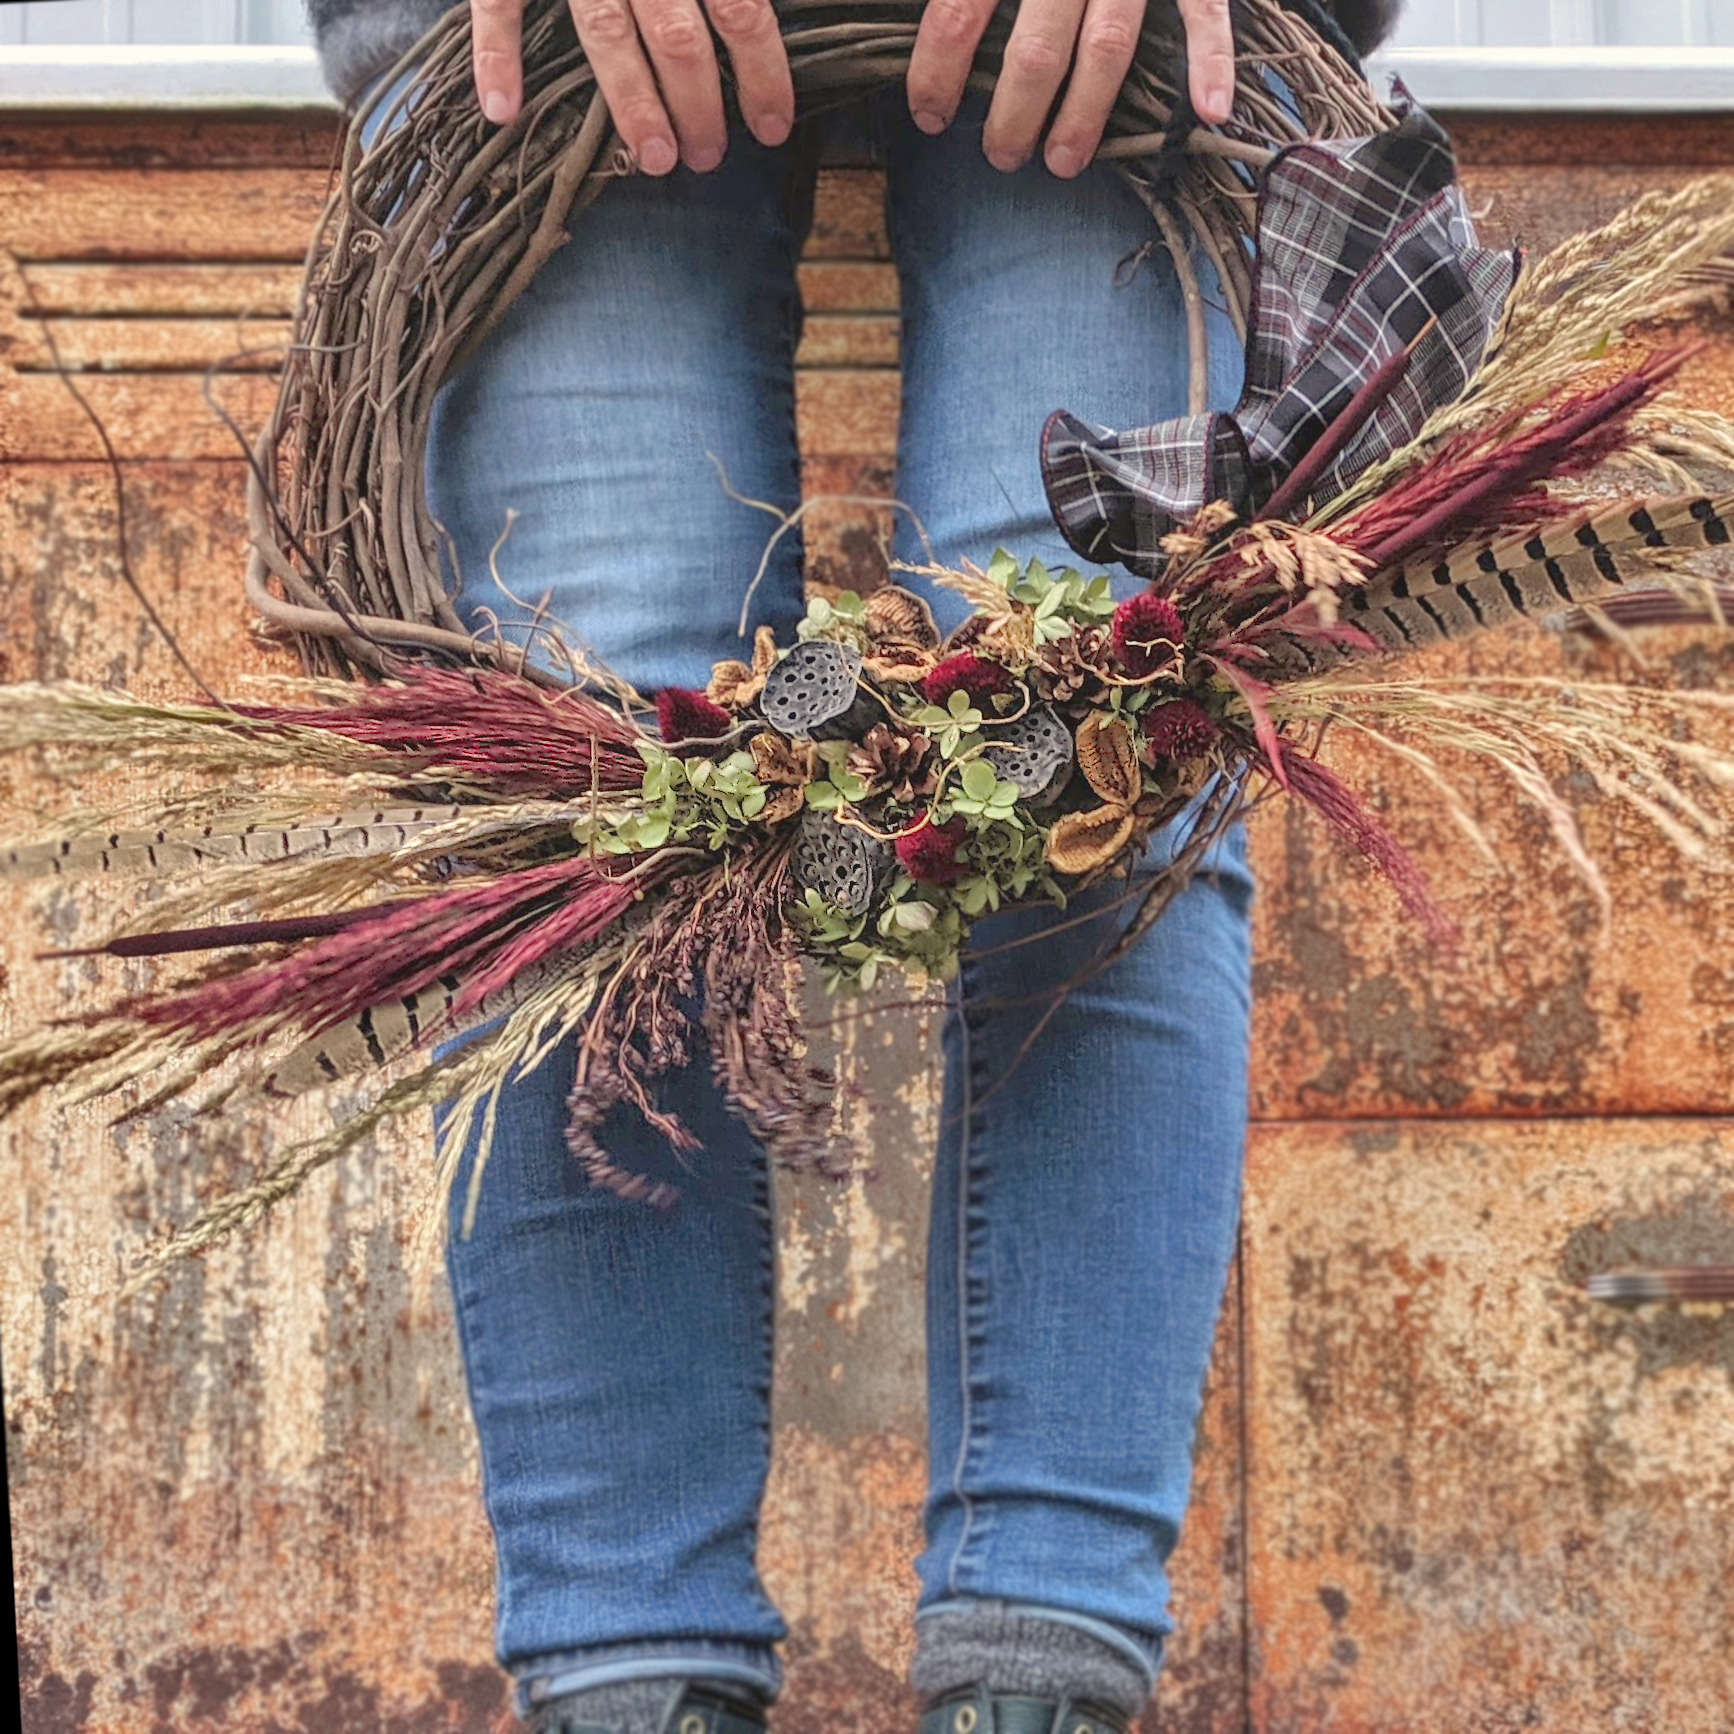 Botanical elements on a grapevine wreath